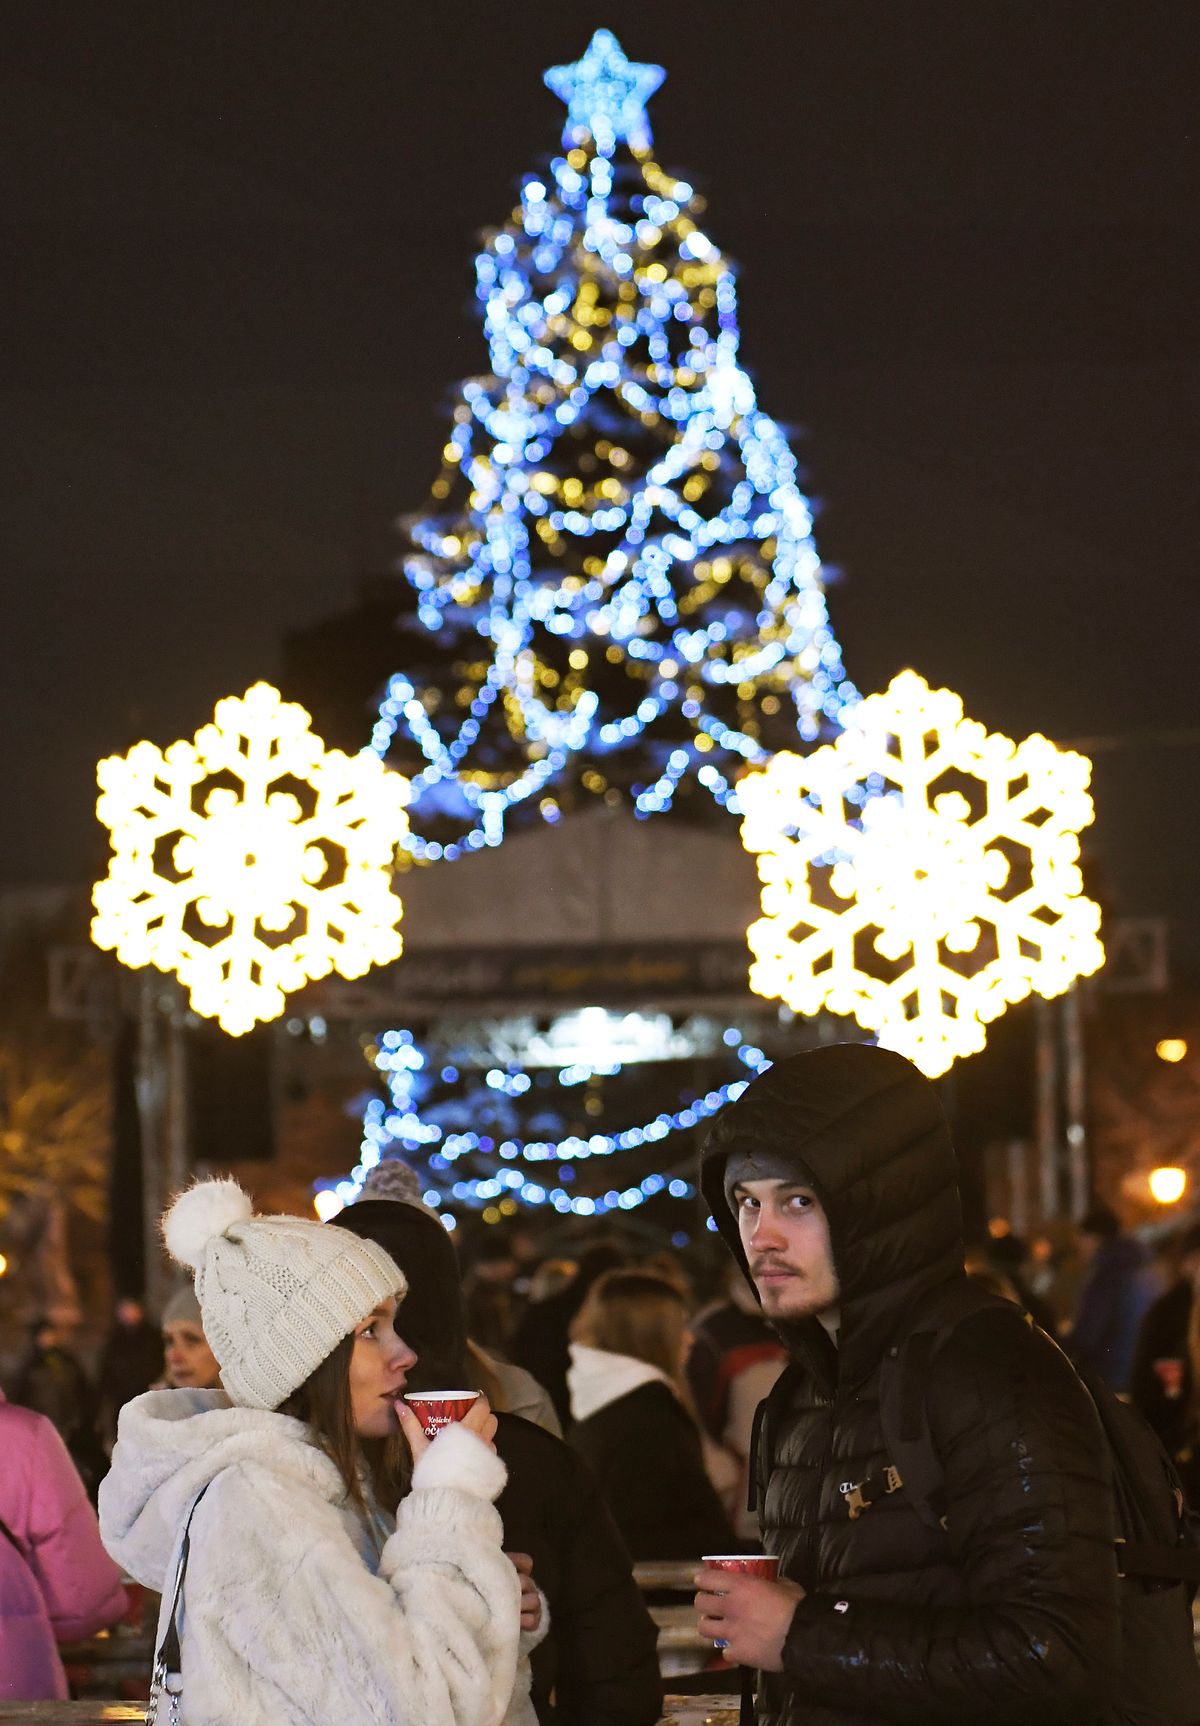 Survey: Christmas Viewed Mainly as Religious Holiday among Slovaks